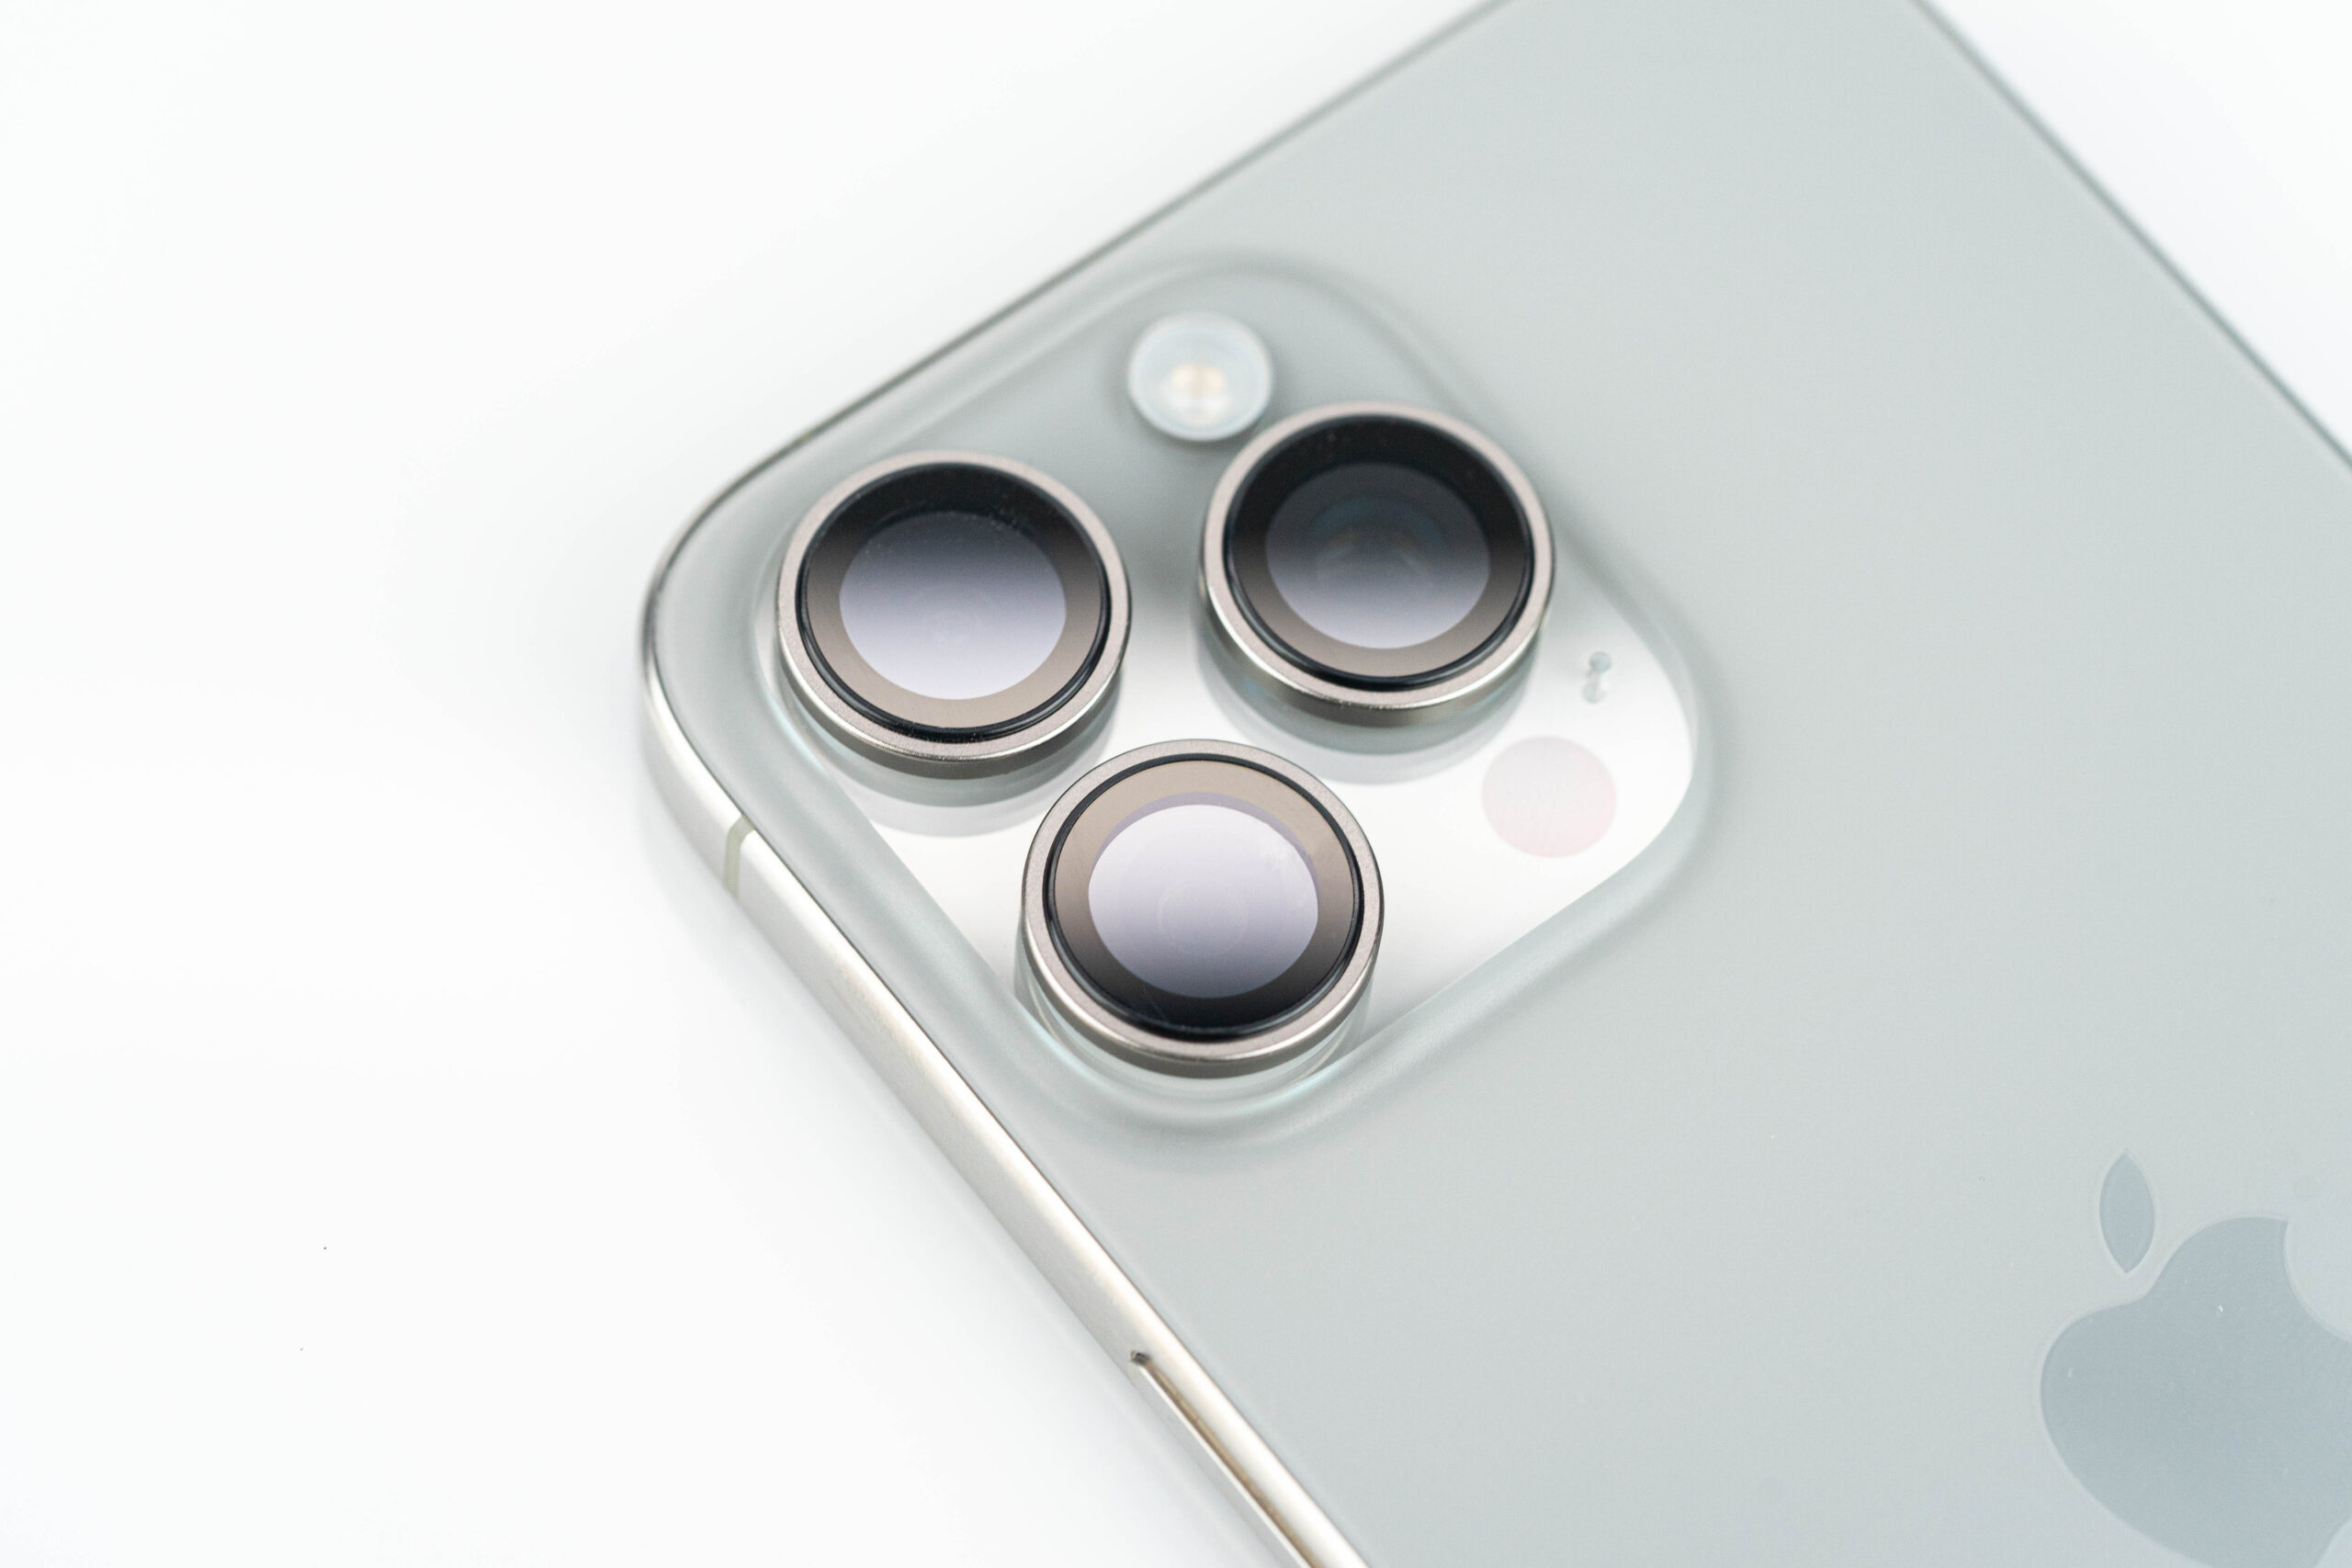 Hoda รุ่น Sapphire Lens Protector ขอบ Titanium - กระจกเลนส์กล้อง iPhone 15 Pro / 15 Pro Max